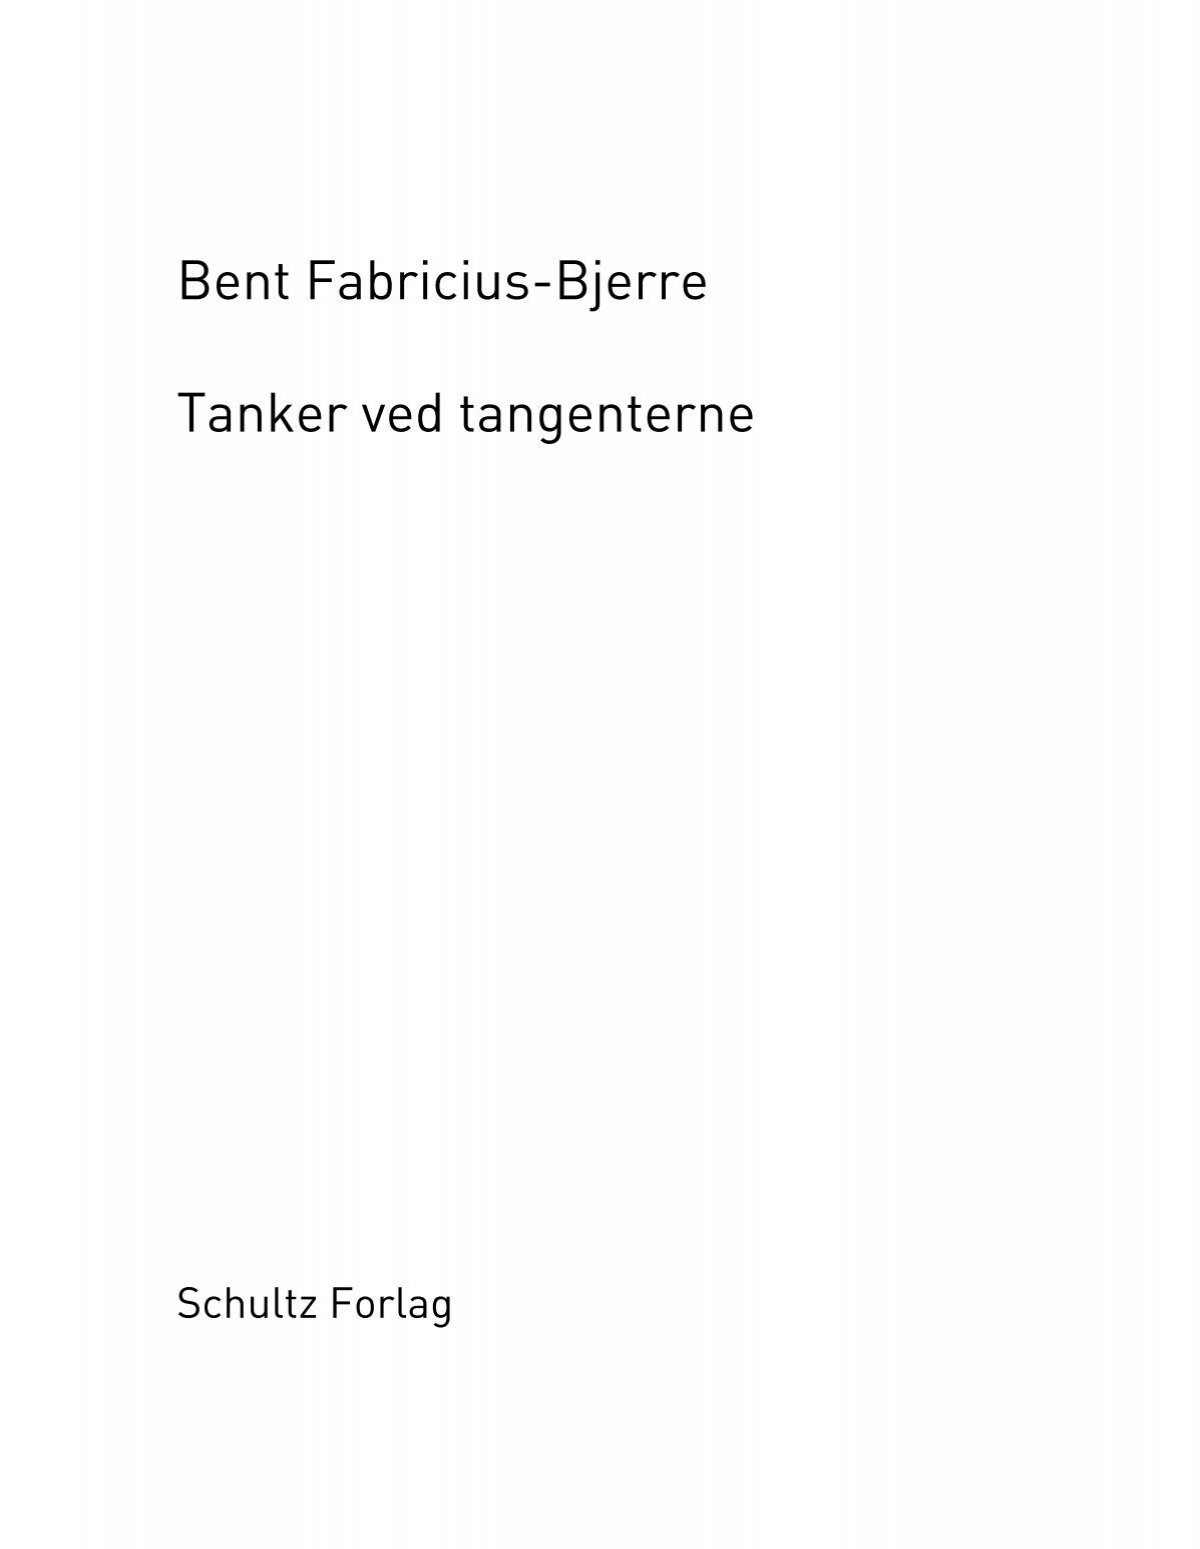 Bent Fabricius-Bjerre Tanker tangenterne - of Bent Fabricius ...